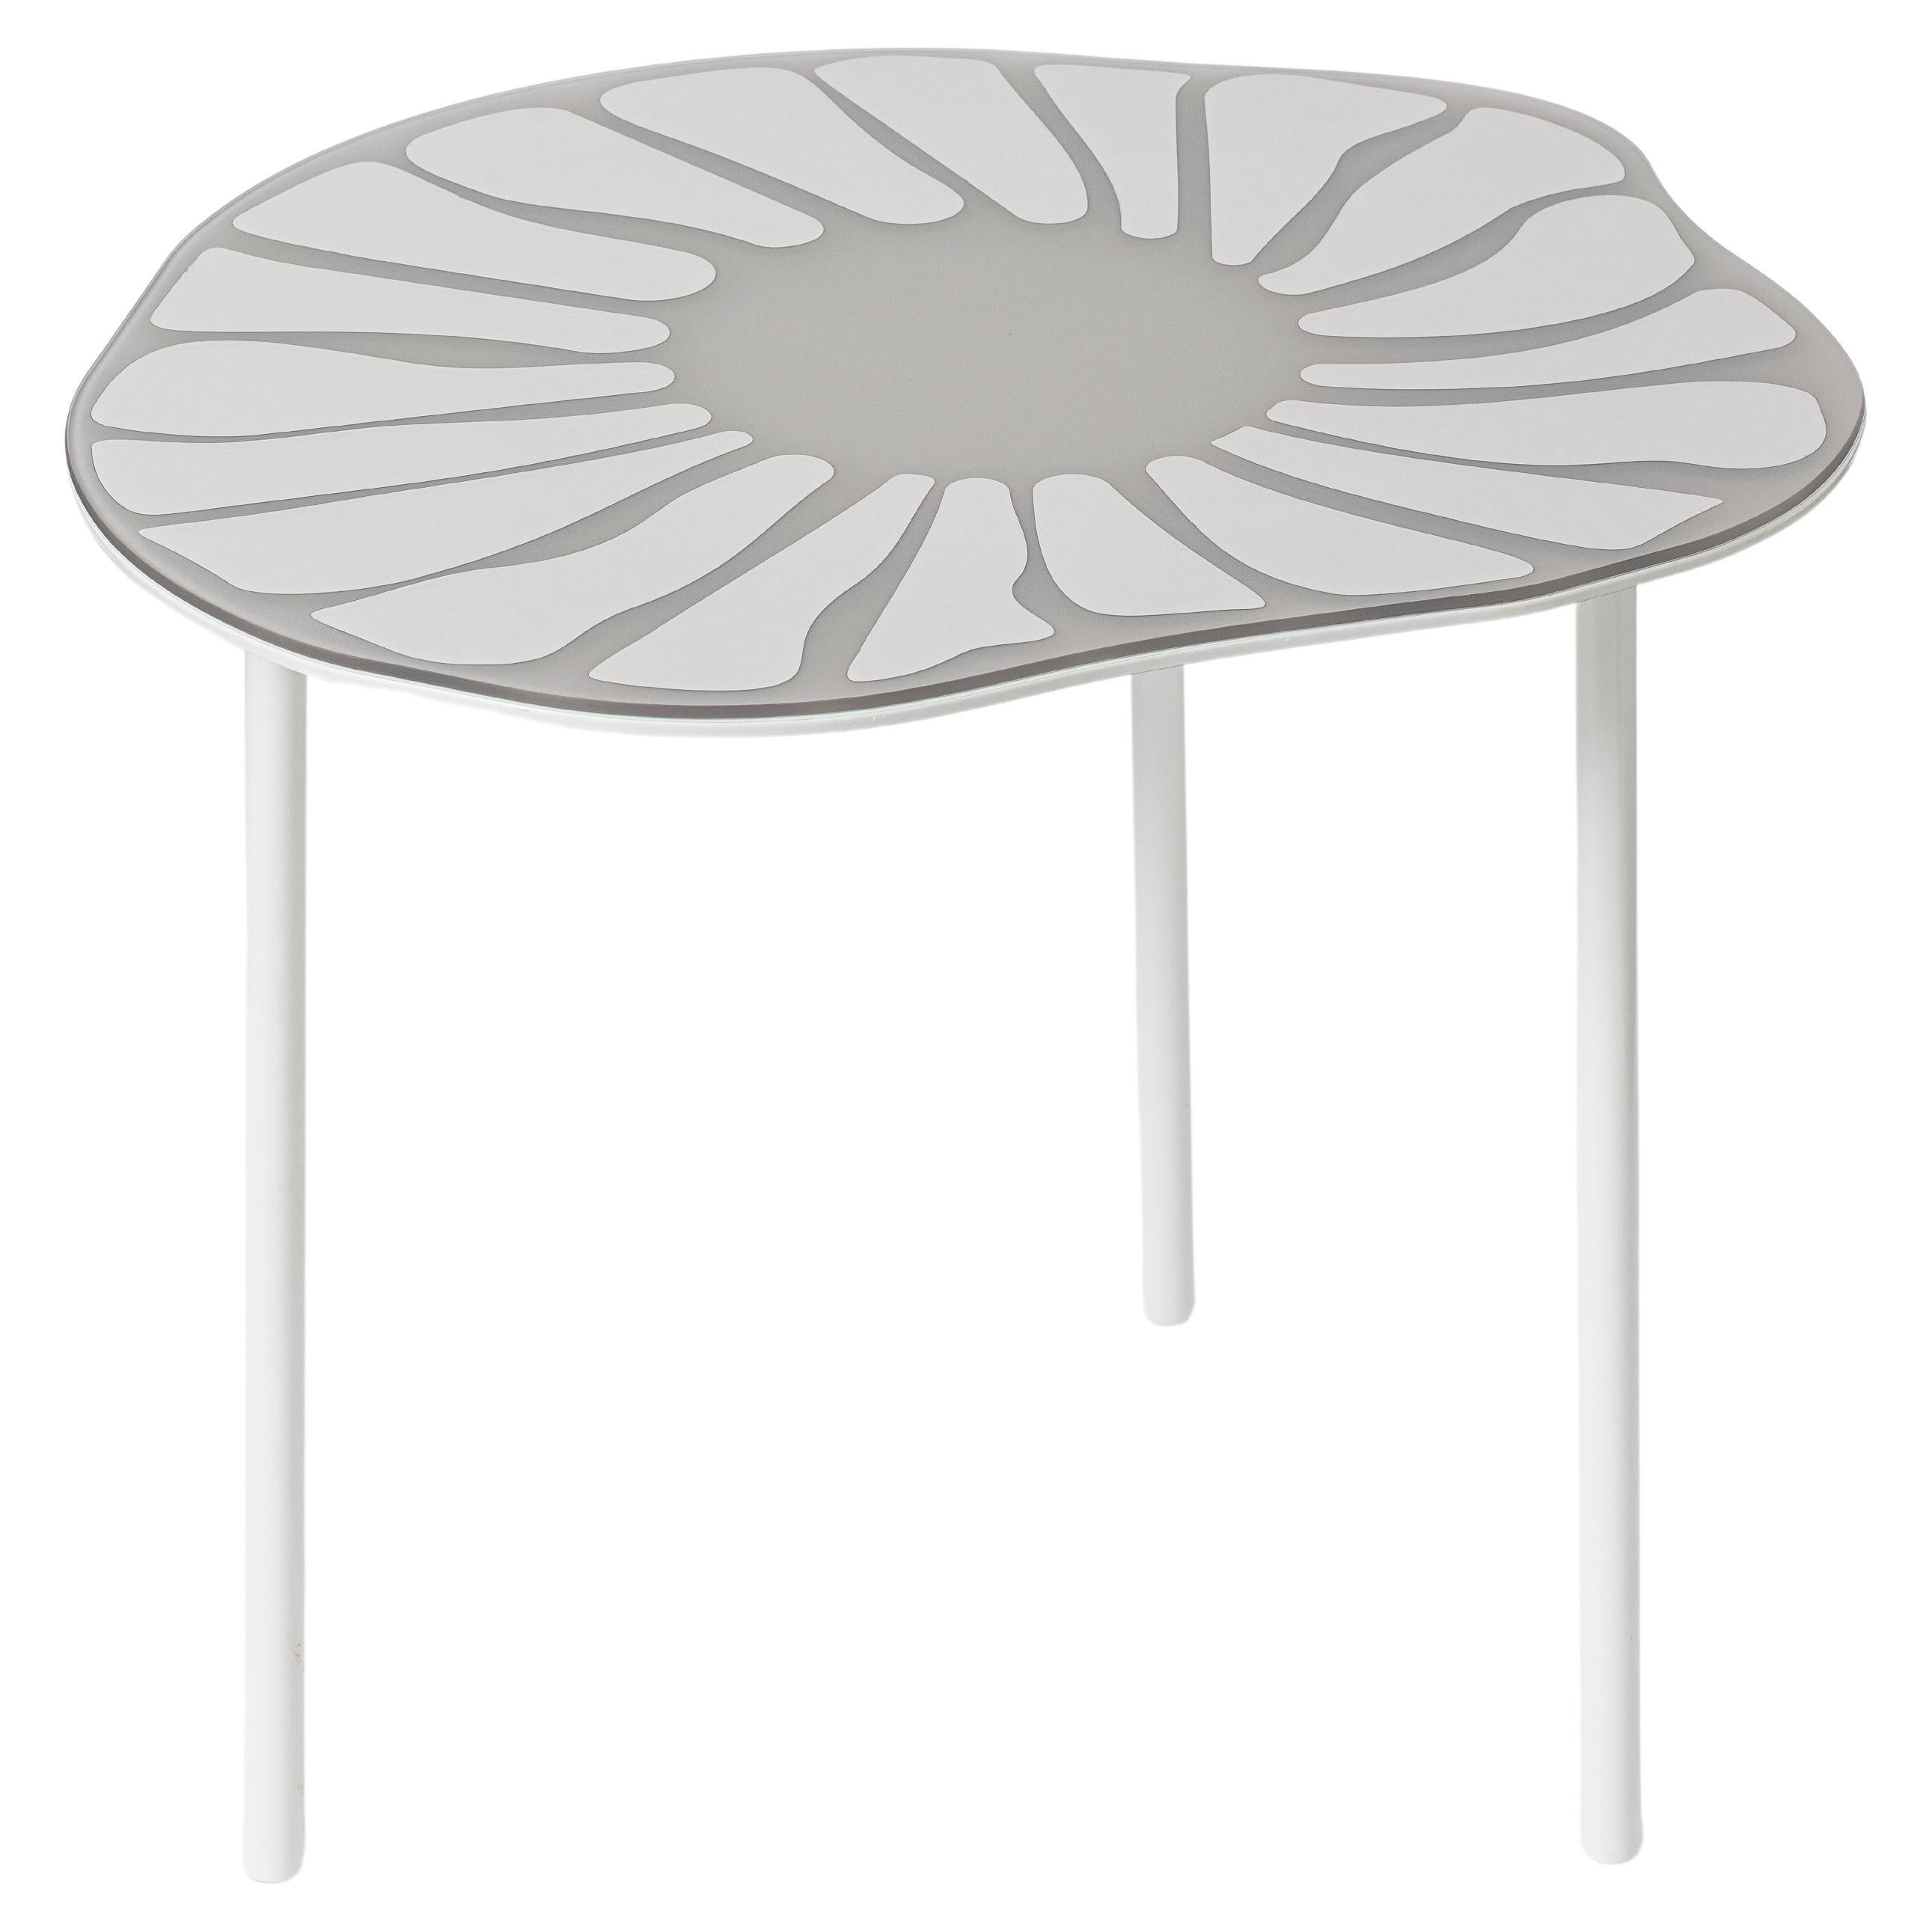 Table basse argentée avec superfici specchianti e gambe metalliche rimovibili en vente